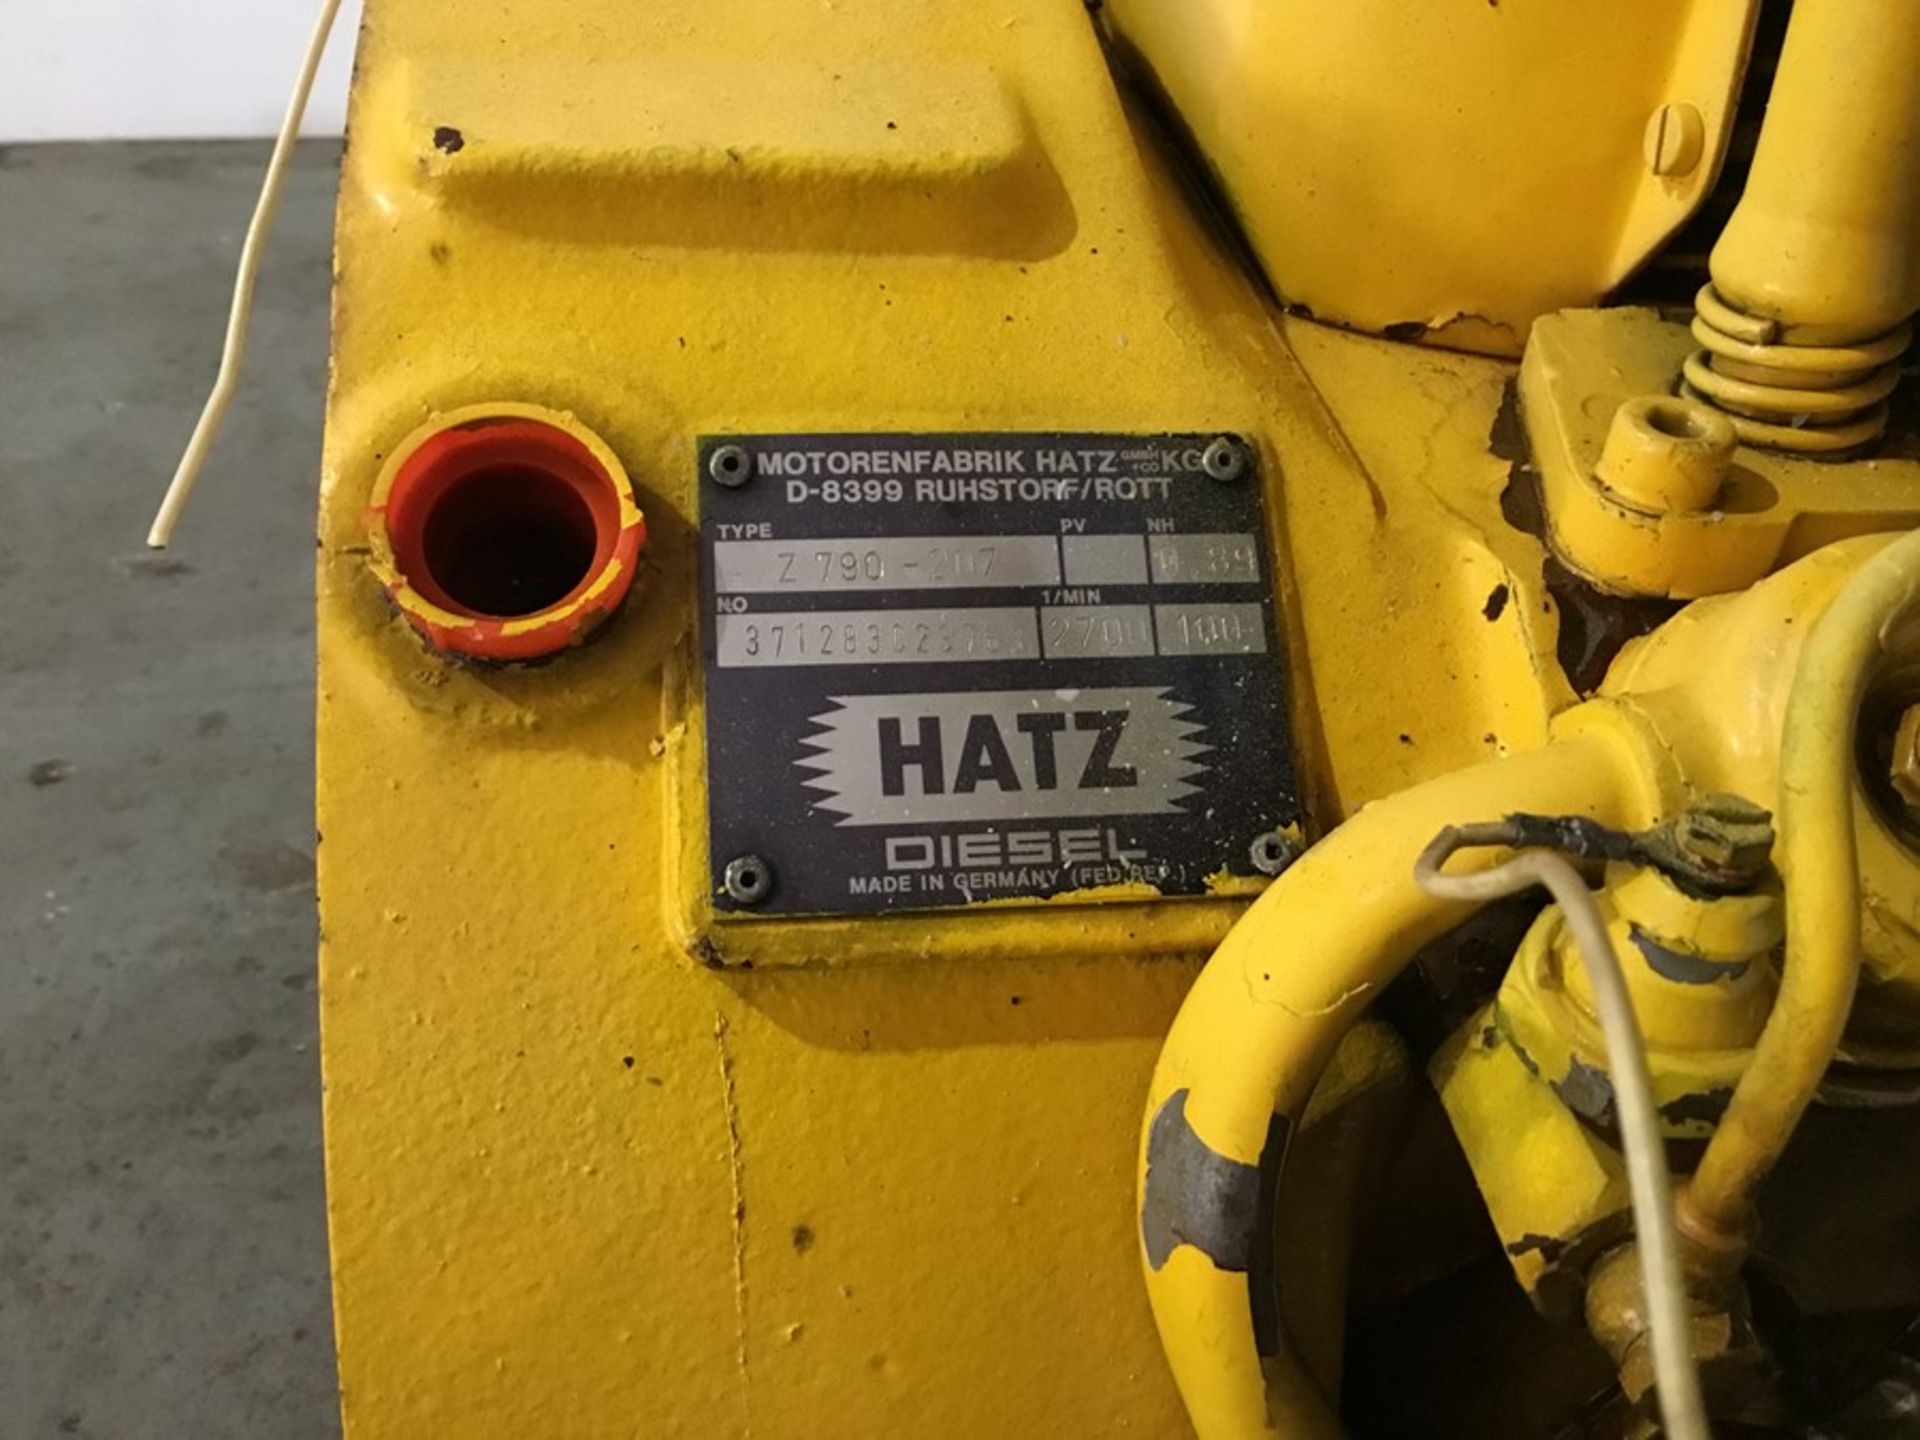 Hatz Z790-207D Diesel engine: Hatz Z790-207D, 2cyl non turbo Serial number 371283023763 - Image 6 of 18